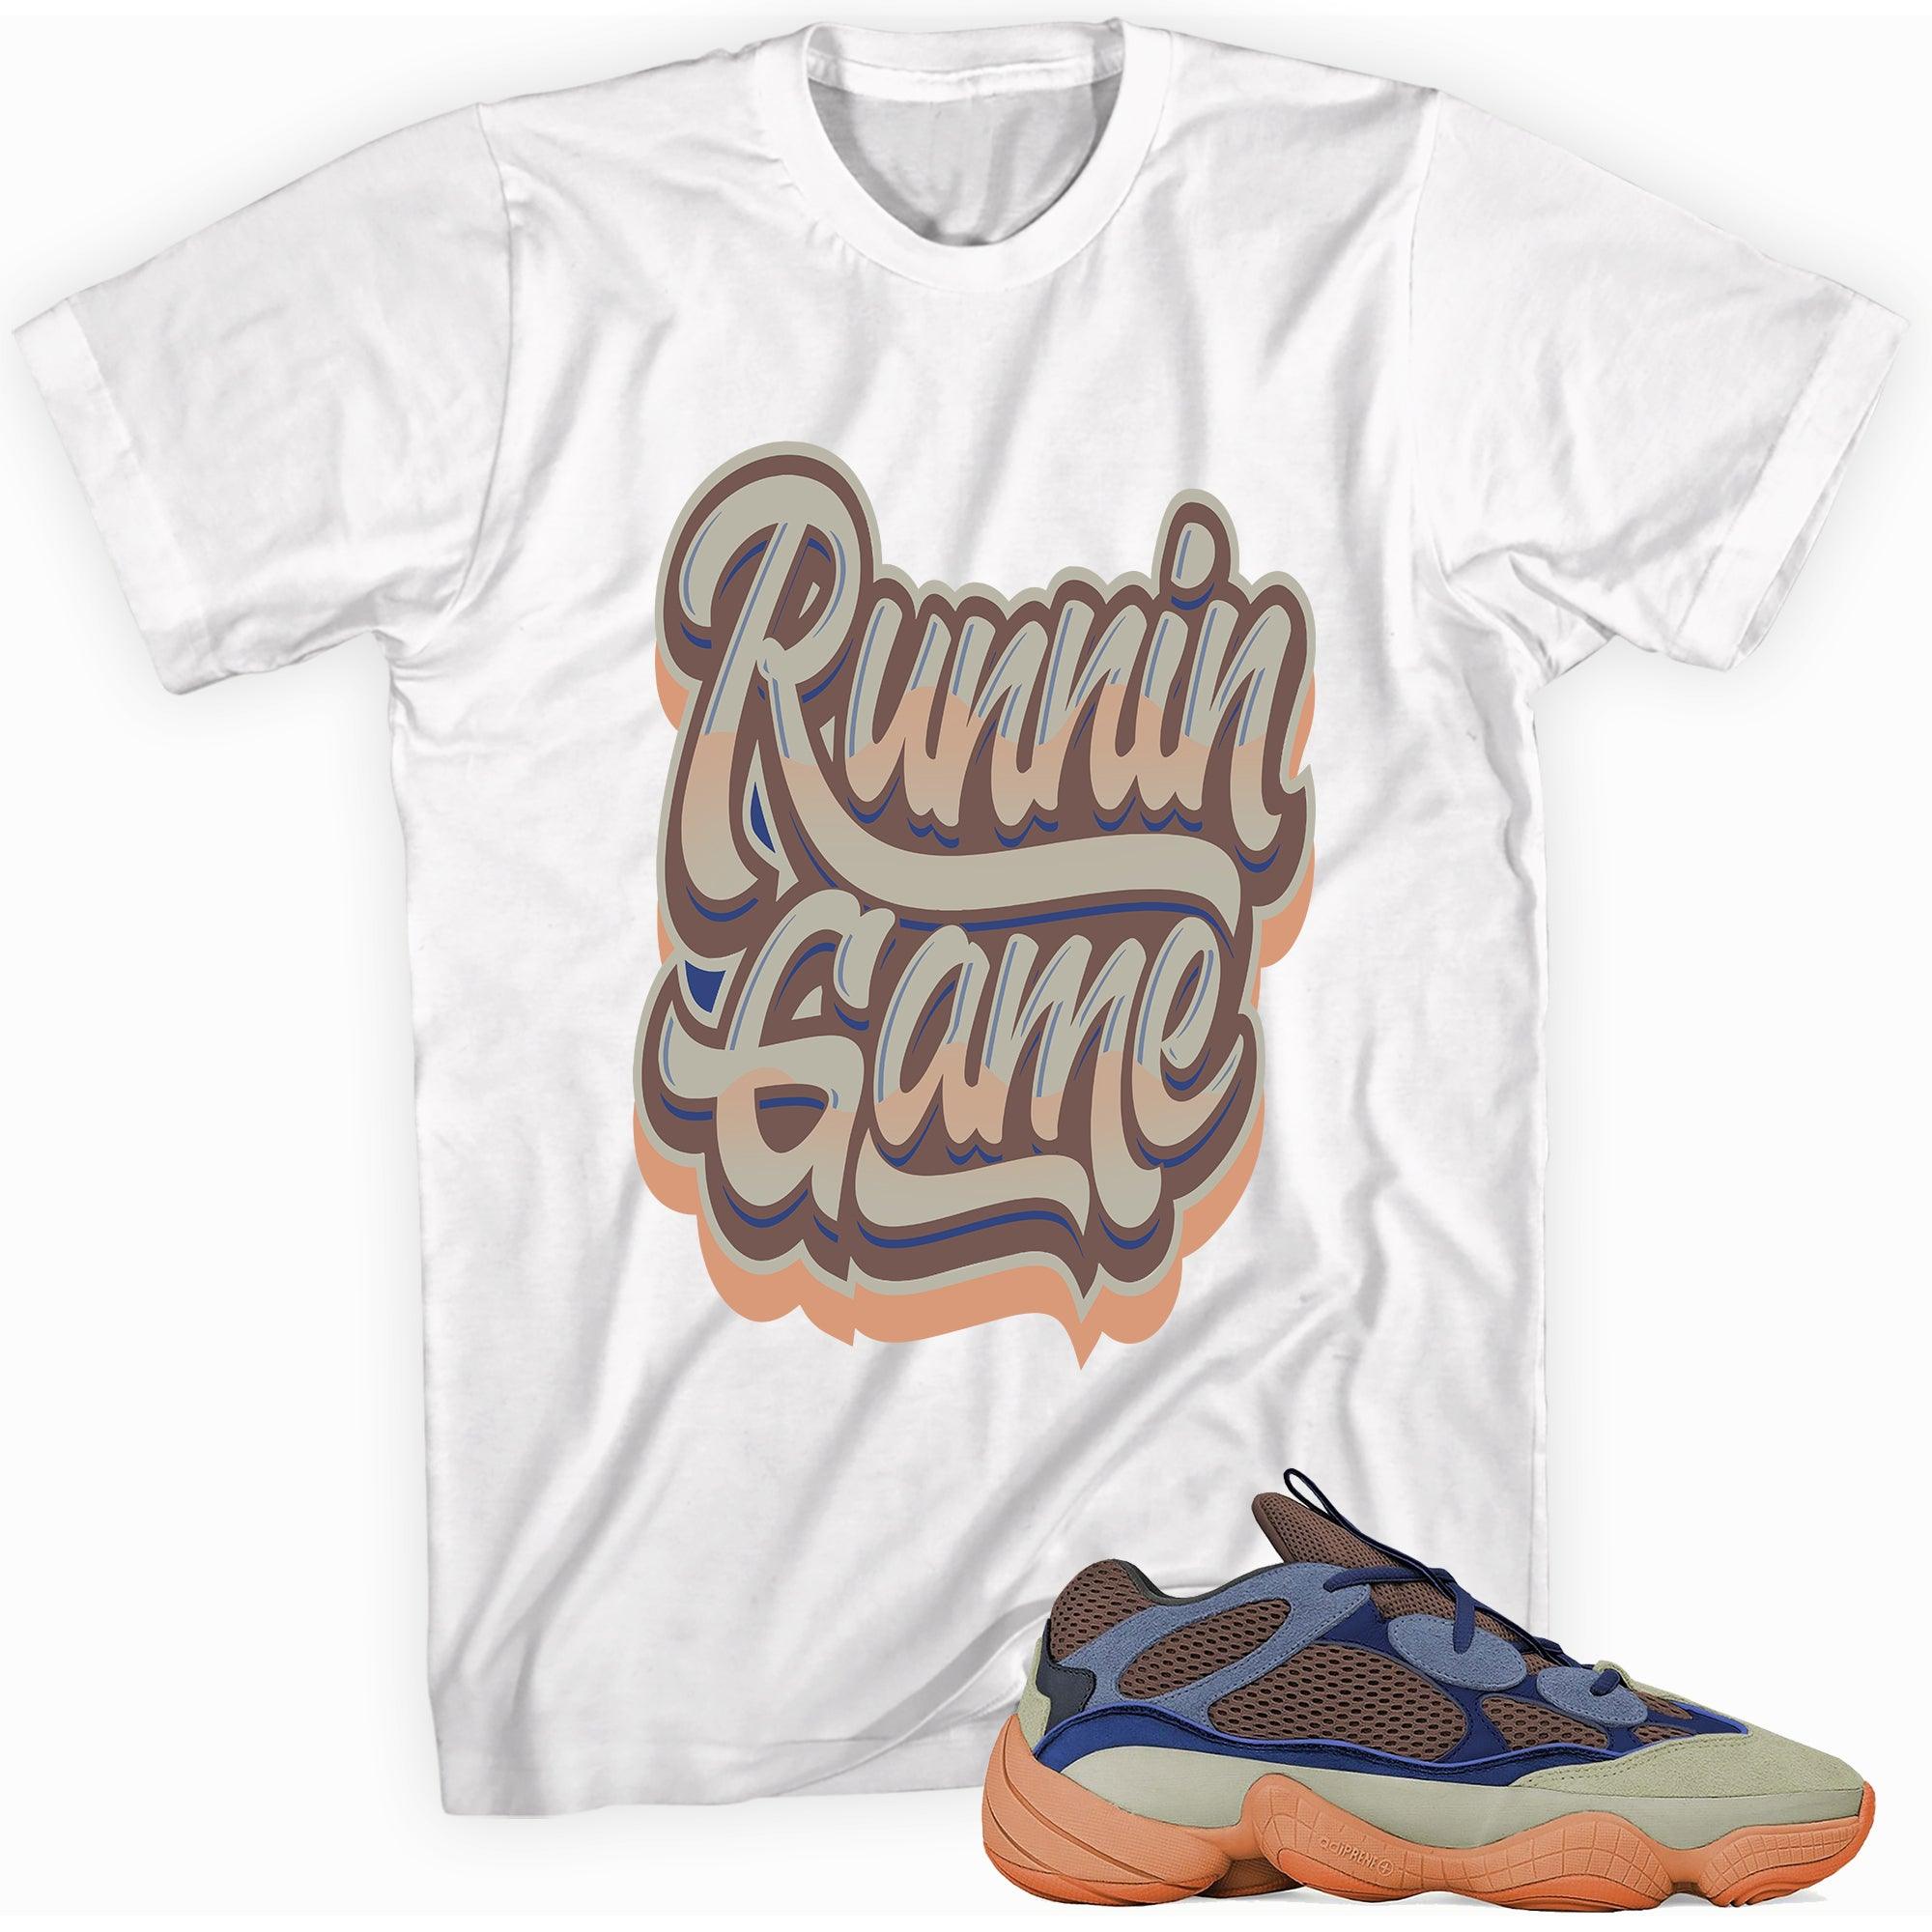 Runnin Game Shirt Yeezy 500s Enflame photo